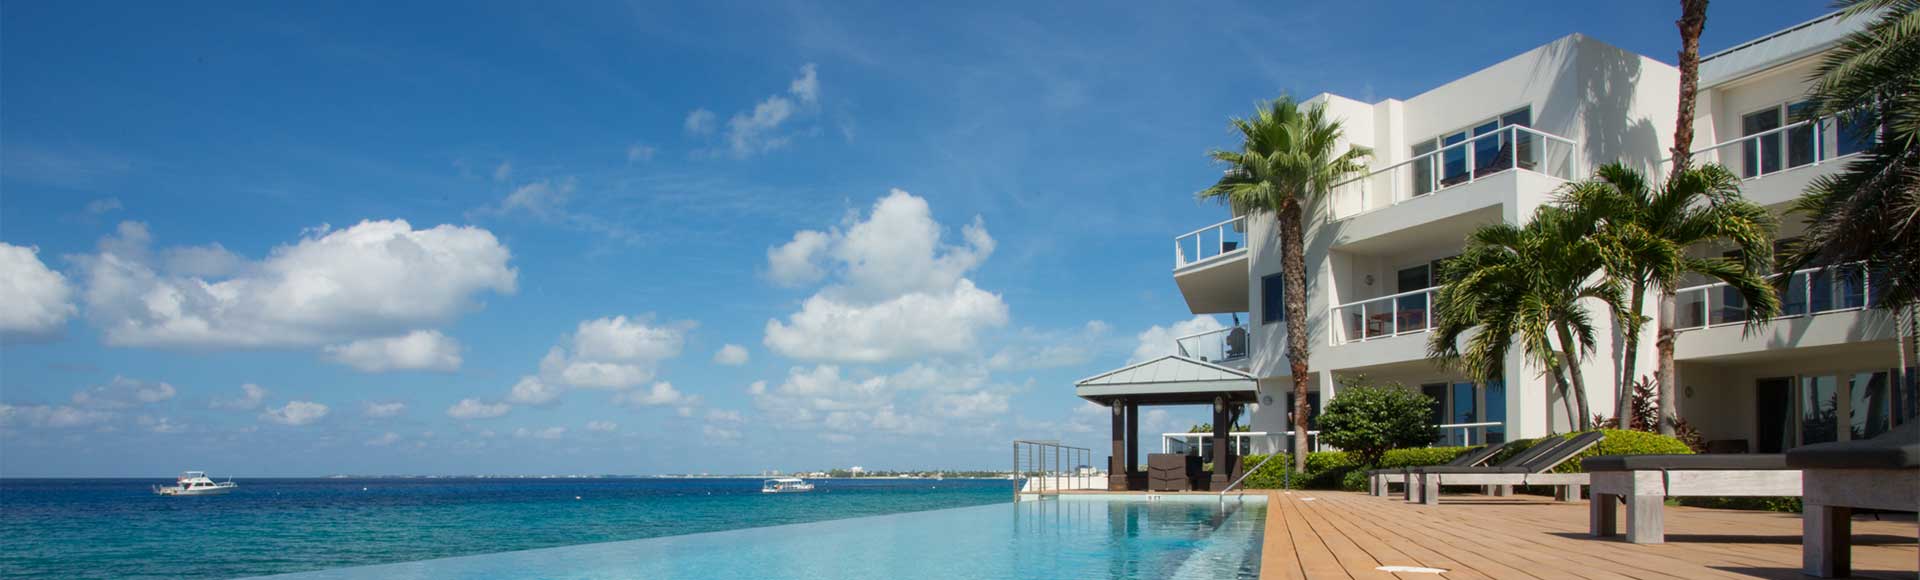 Seaview Condos, Cayman Islands